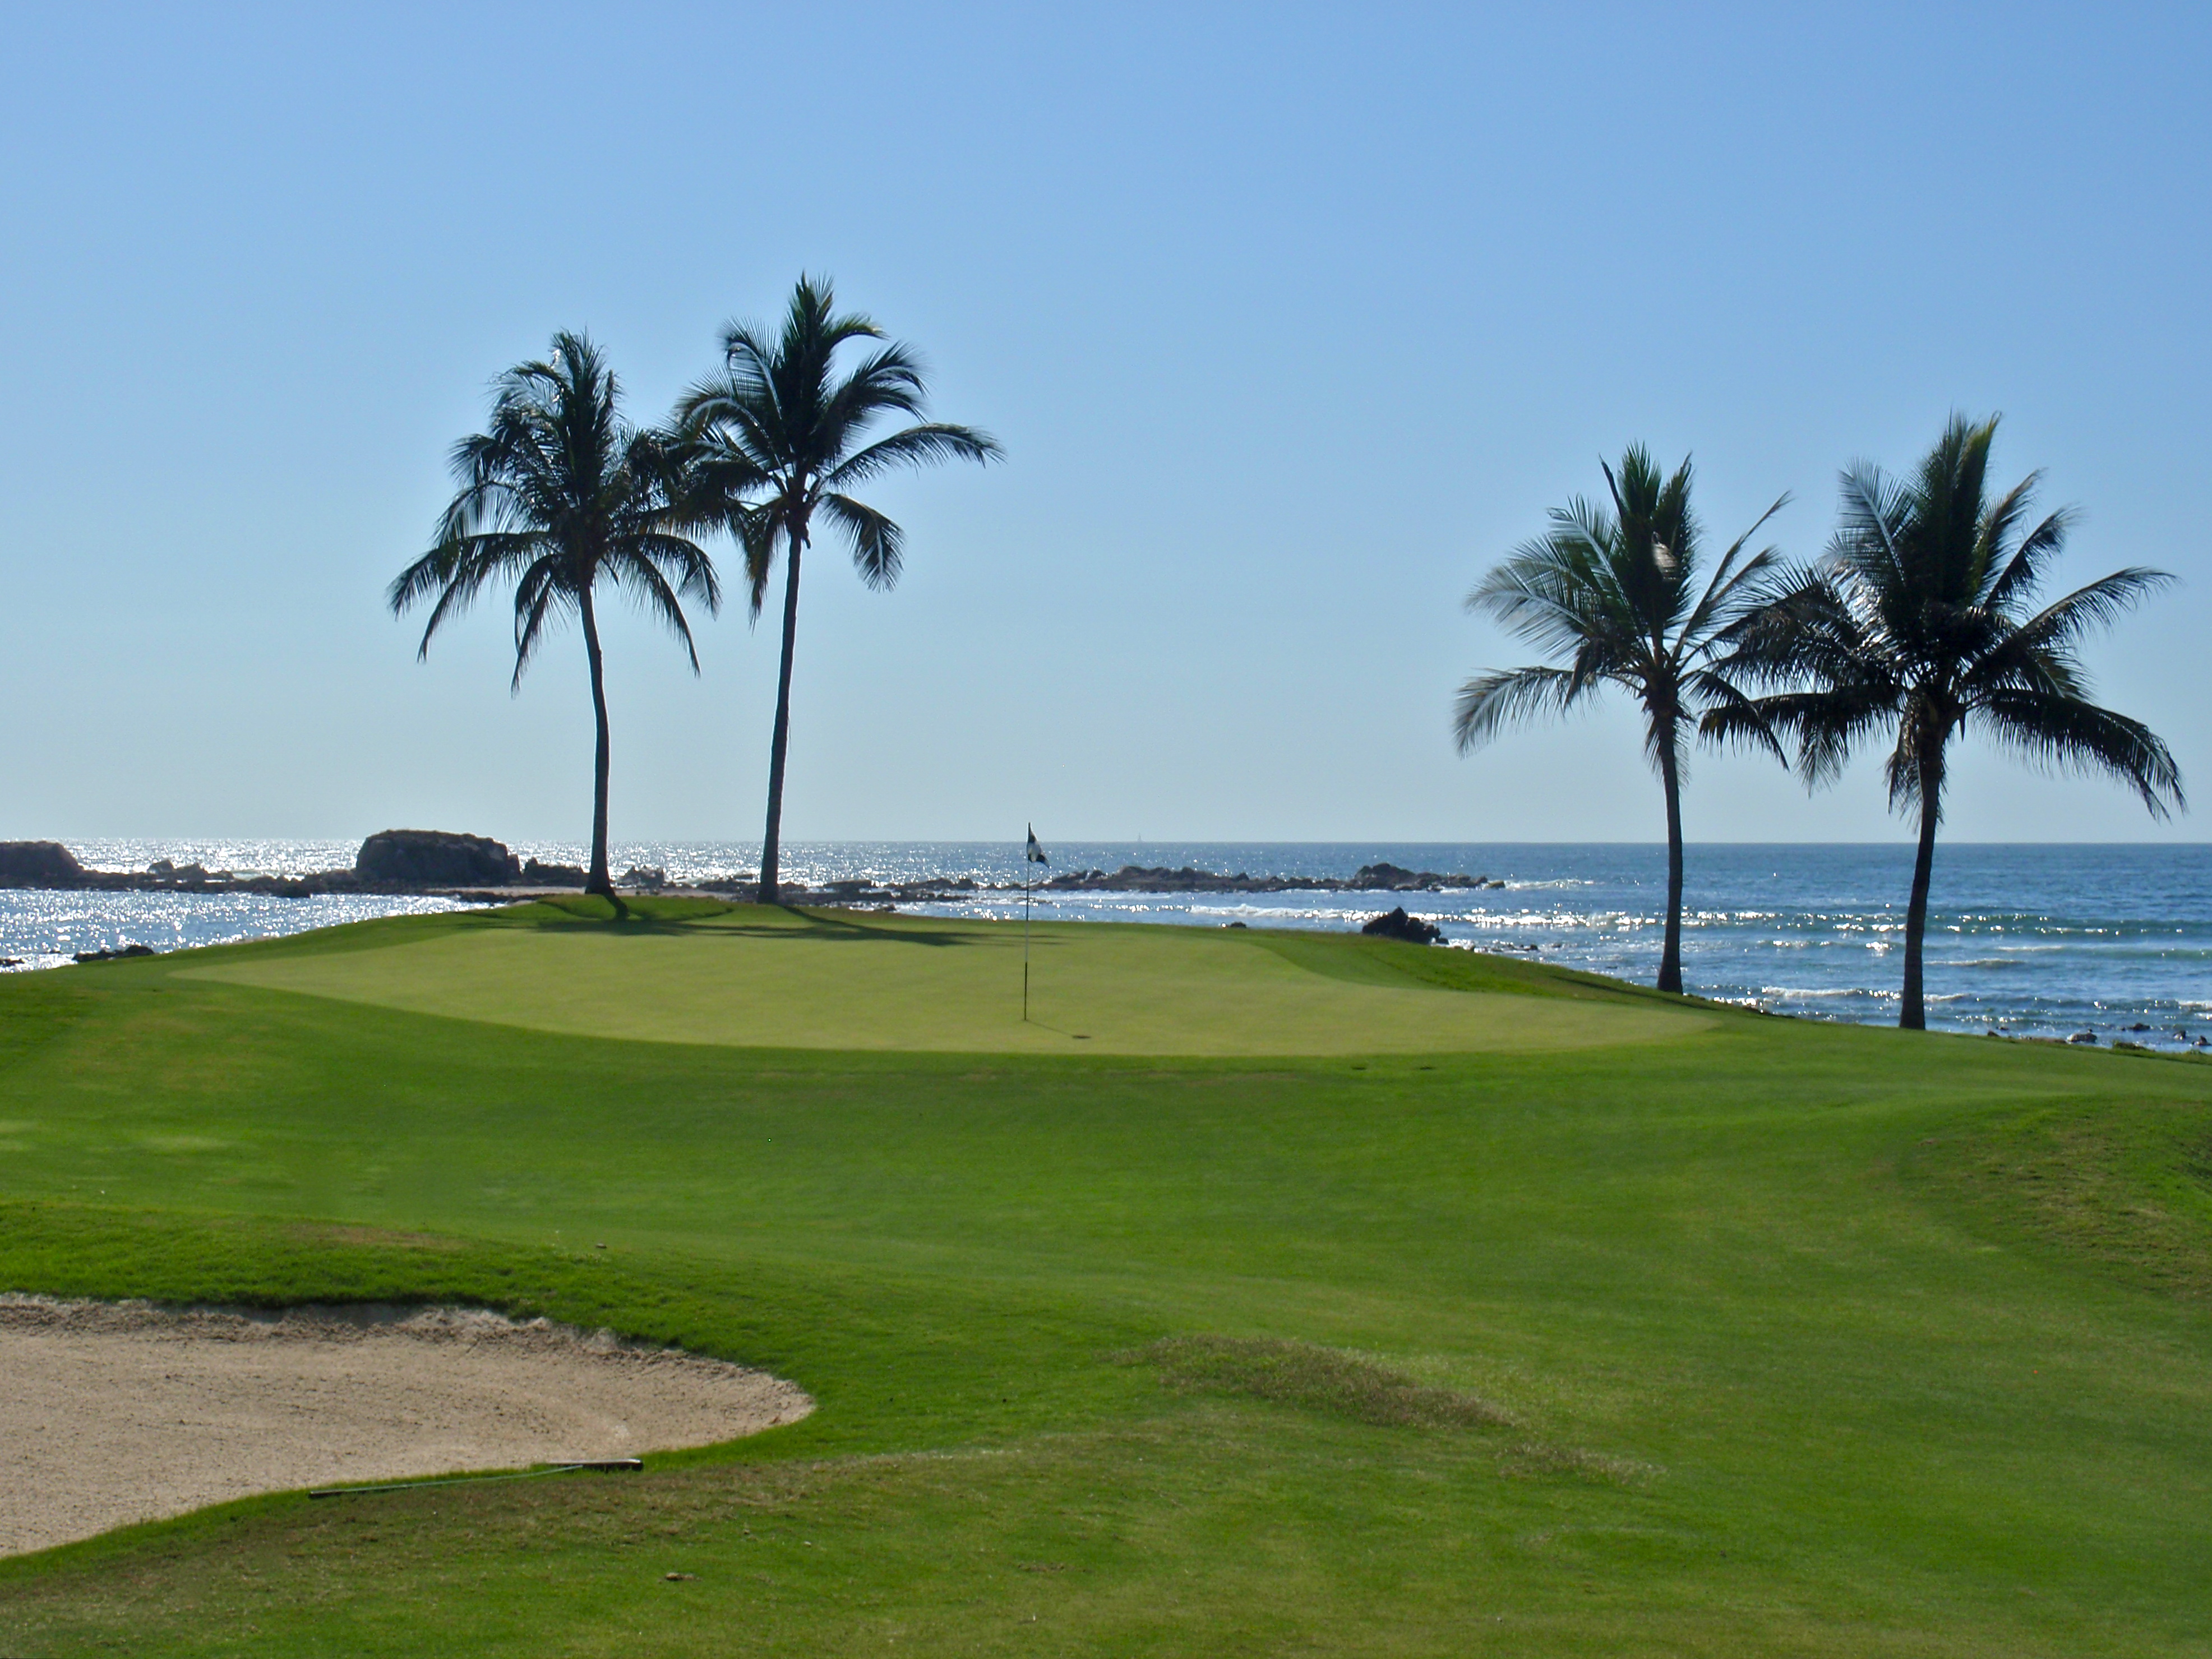 Course Review: Punta Mita Club de Golf – Pacifico Course, Nayarit, Mexico